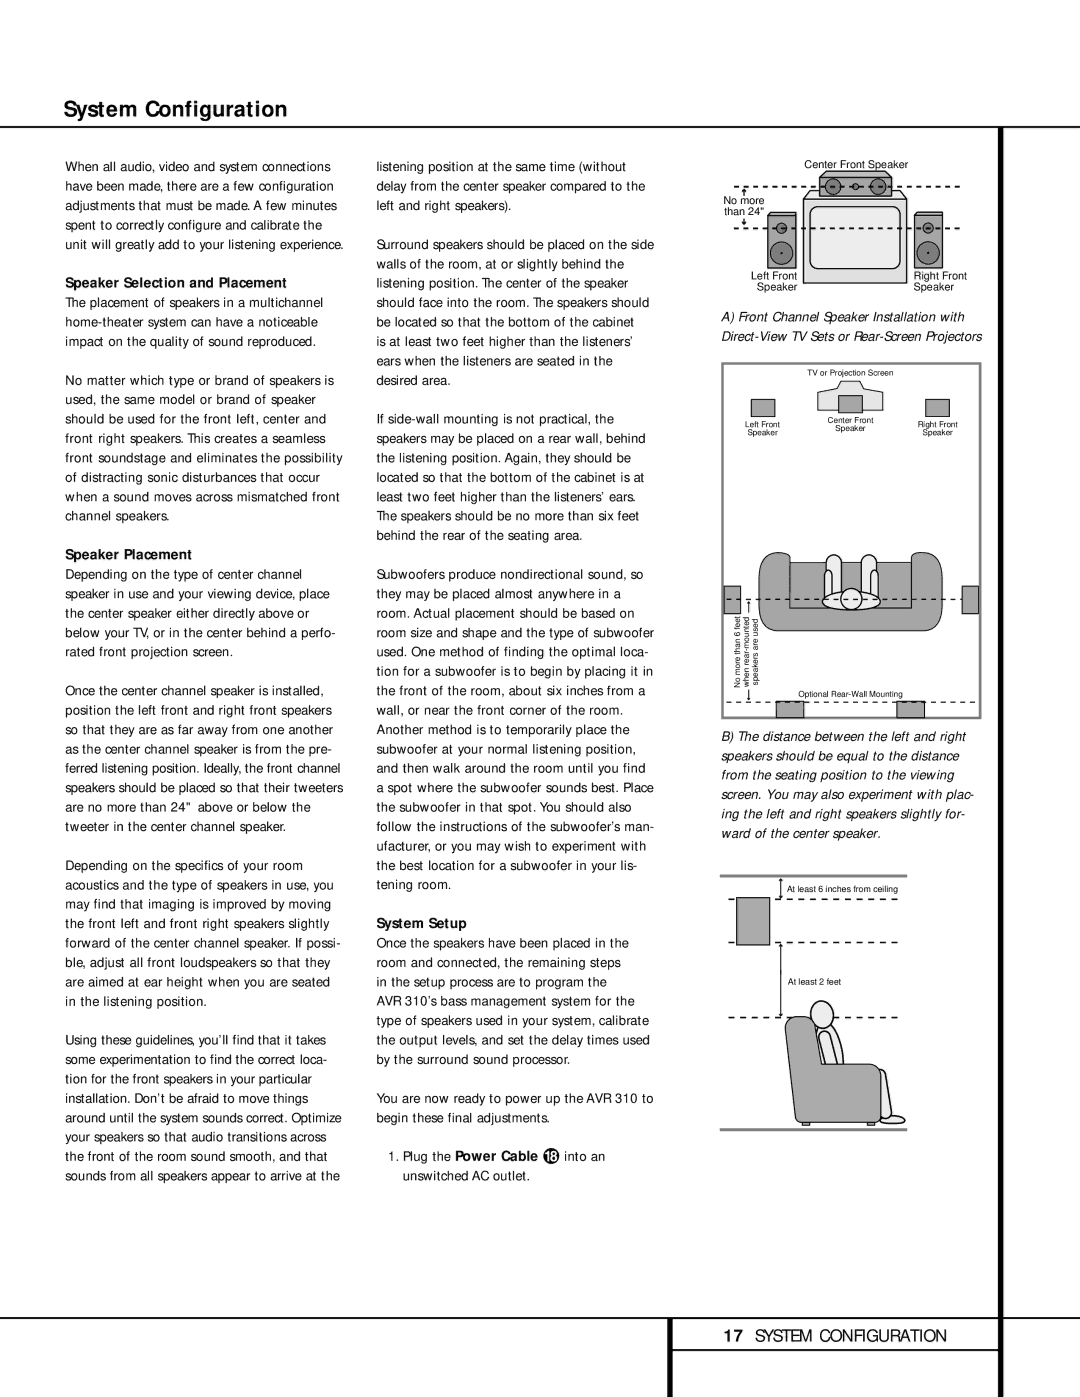 Harman-Kardon AVR 310 owner manual System Configuration, Speaker Selection and Placement, Speaker Placement, System Setup 